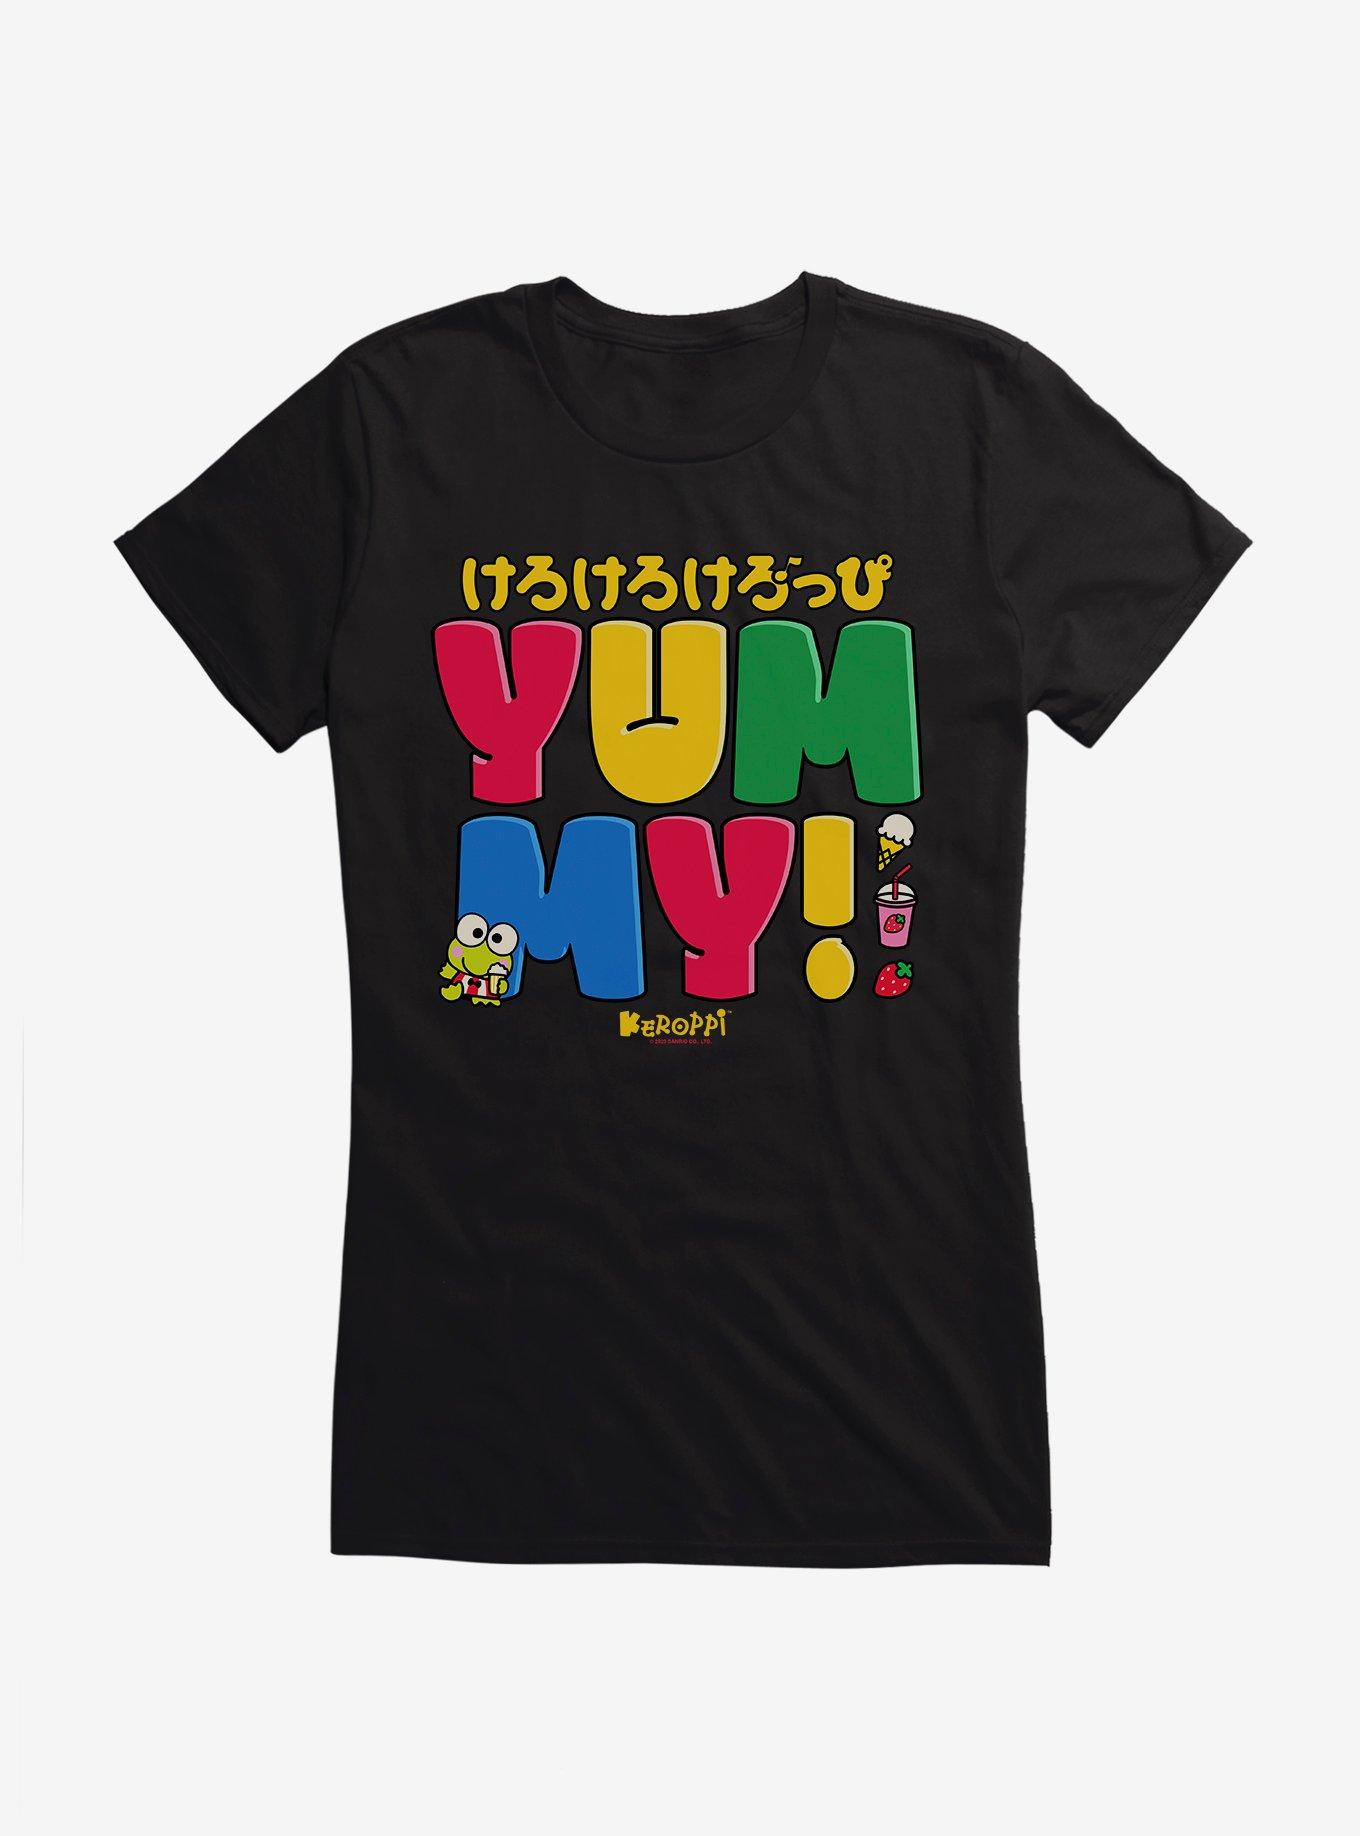 Keroppi Yummy! Girls T-Shirt